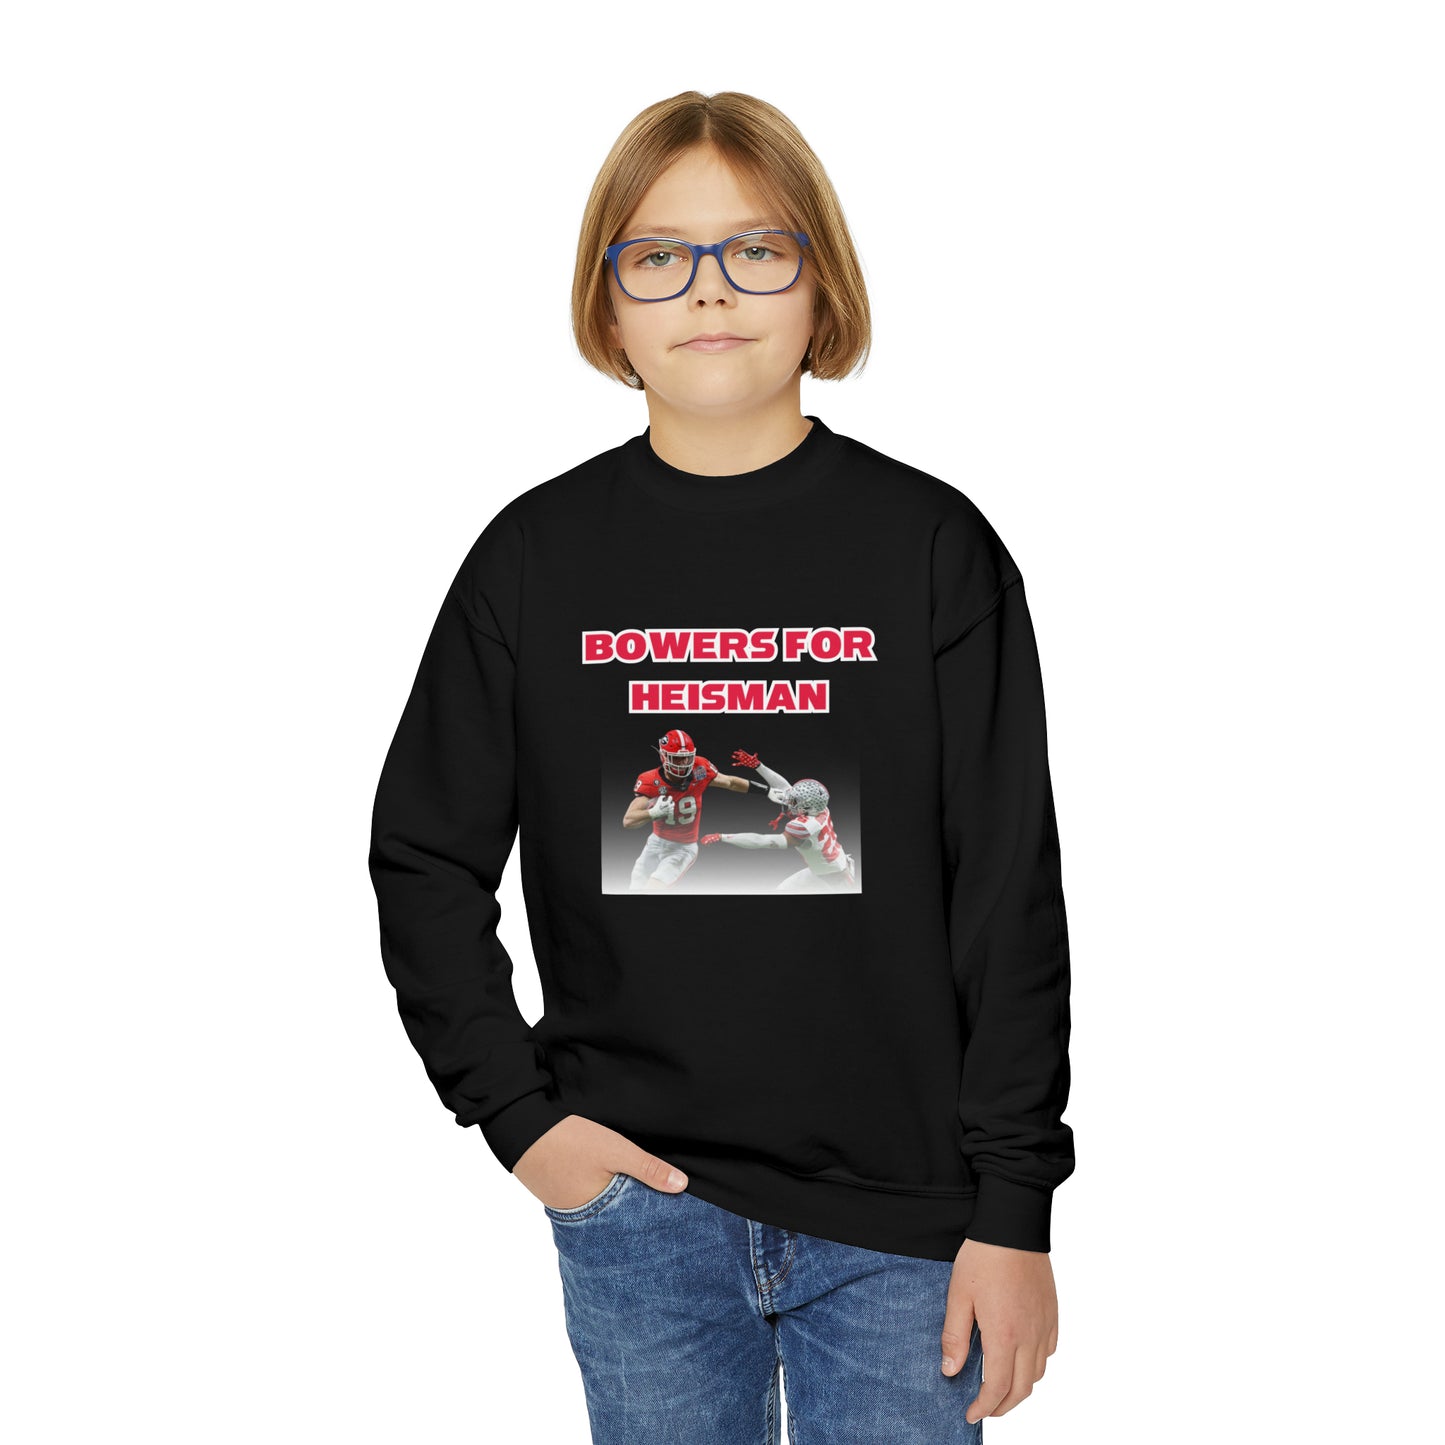 Bowers for Heisman Youth Crewneck Sweatshirt